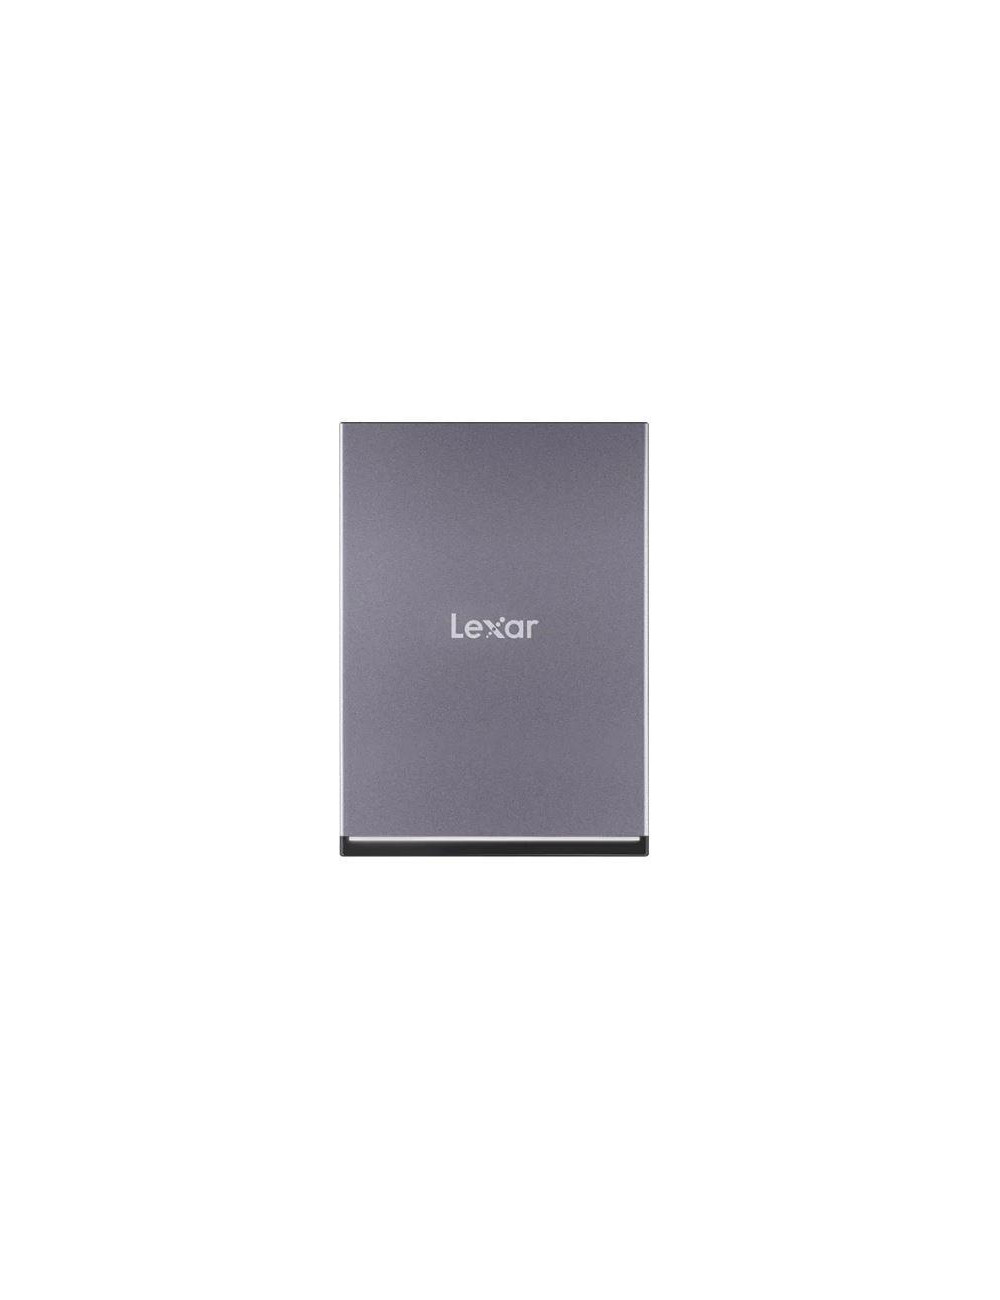 External SSD|LEXAR|SL210|500GB|USB 3.1|Write speed 450 MBytes/sec|Read speed 550 MBytes/sec|LSL210X500G-RNNNG